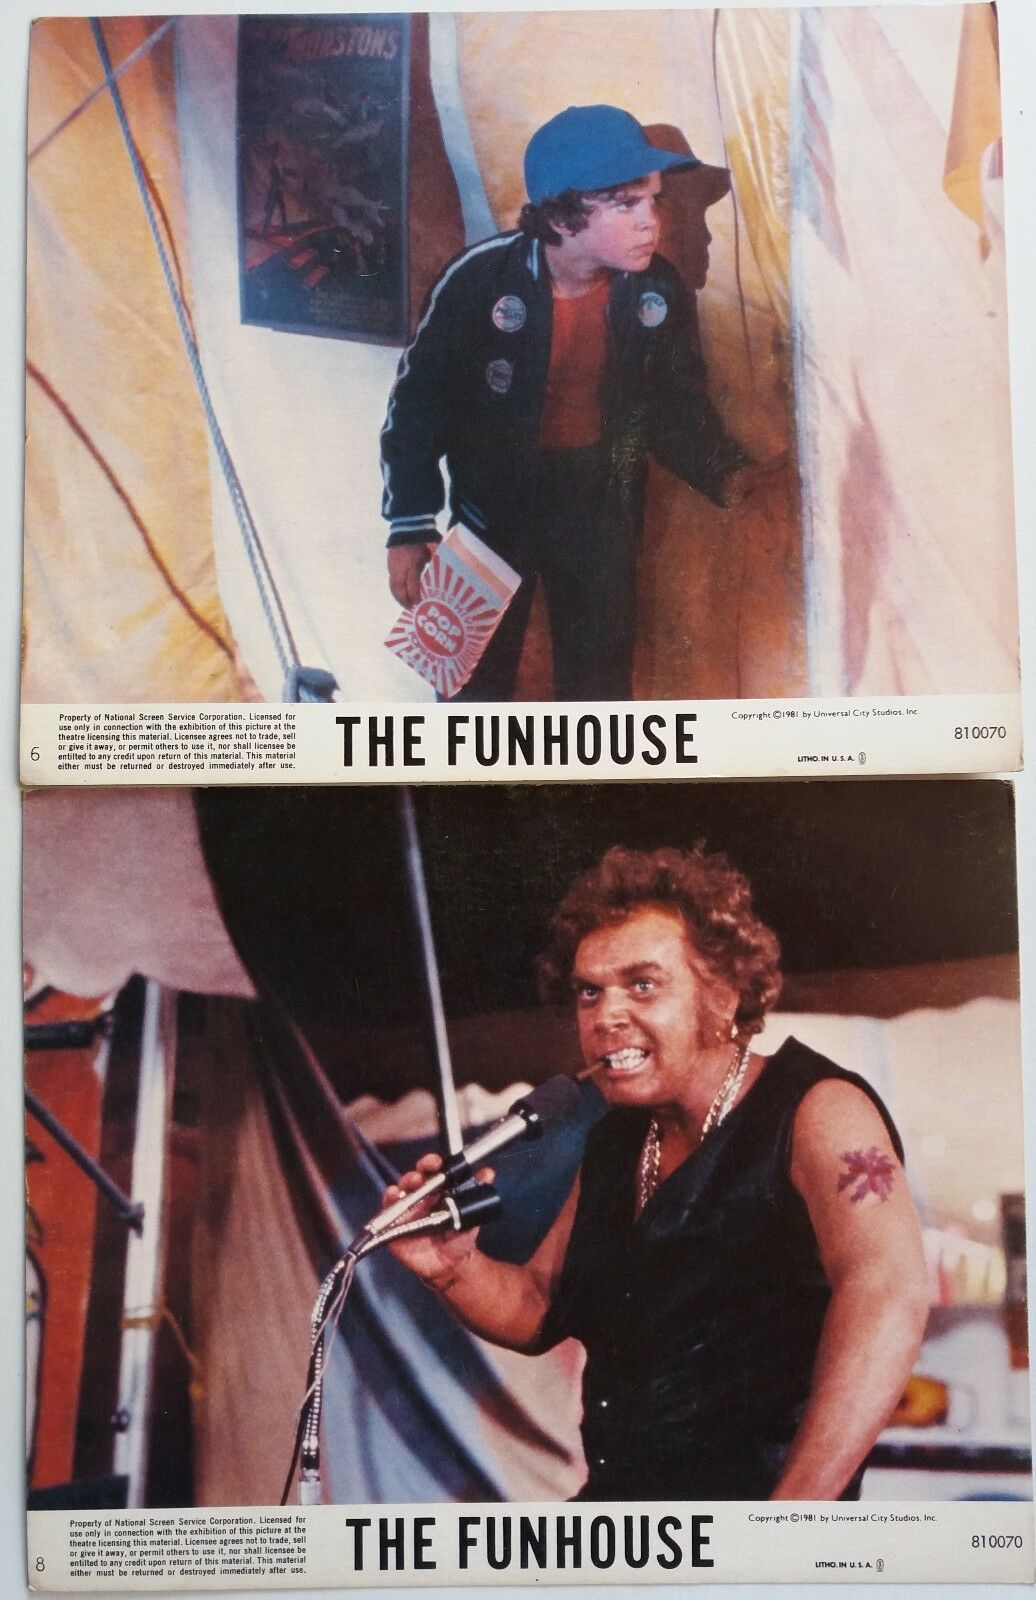 The Fun House 1981 Original Us Movie Lobby Card Size -8x10 Inch # 2 Piece